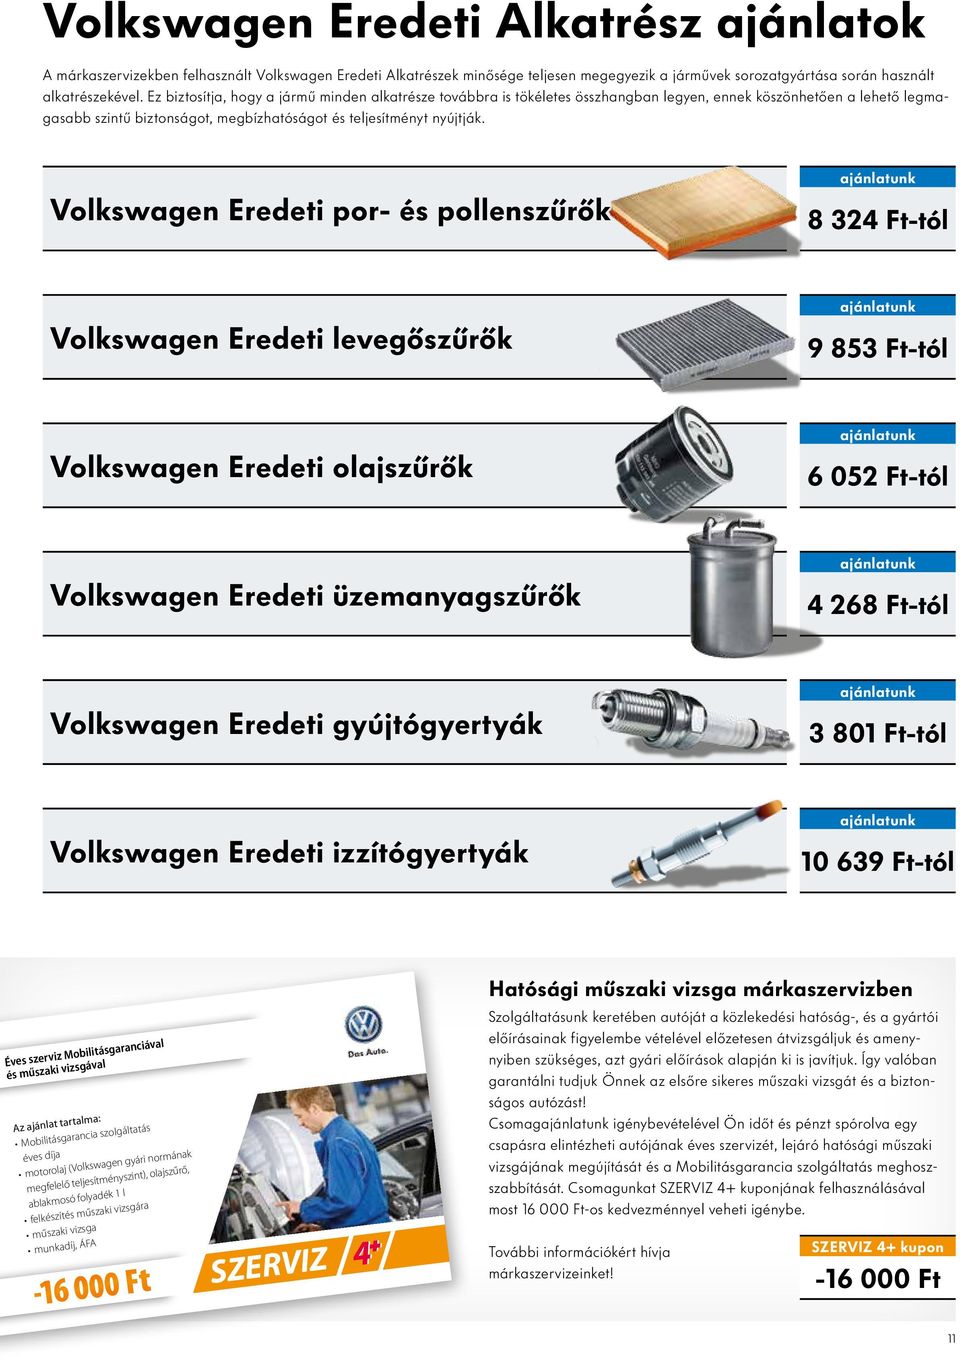 Volkswagen Eredeti por- és pollenszűrők ajánlatunk 8 324 Ft-tól Volkswagen Eredeti levegőszűrők ajánlatunk 9 853 Ft-tól Volkswagen Eredeti olajszűrők ajánlatunk 6 052 Ft-tól Volkswagen Eredeti